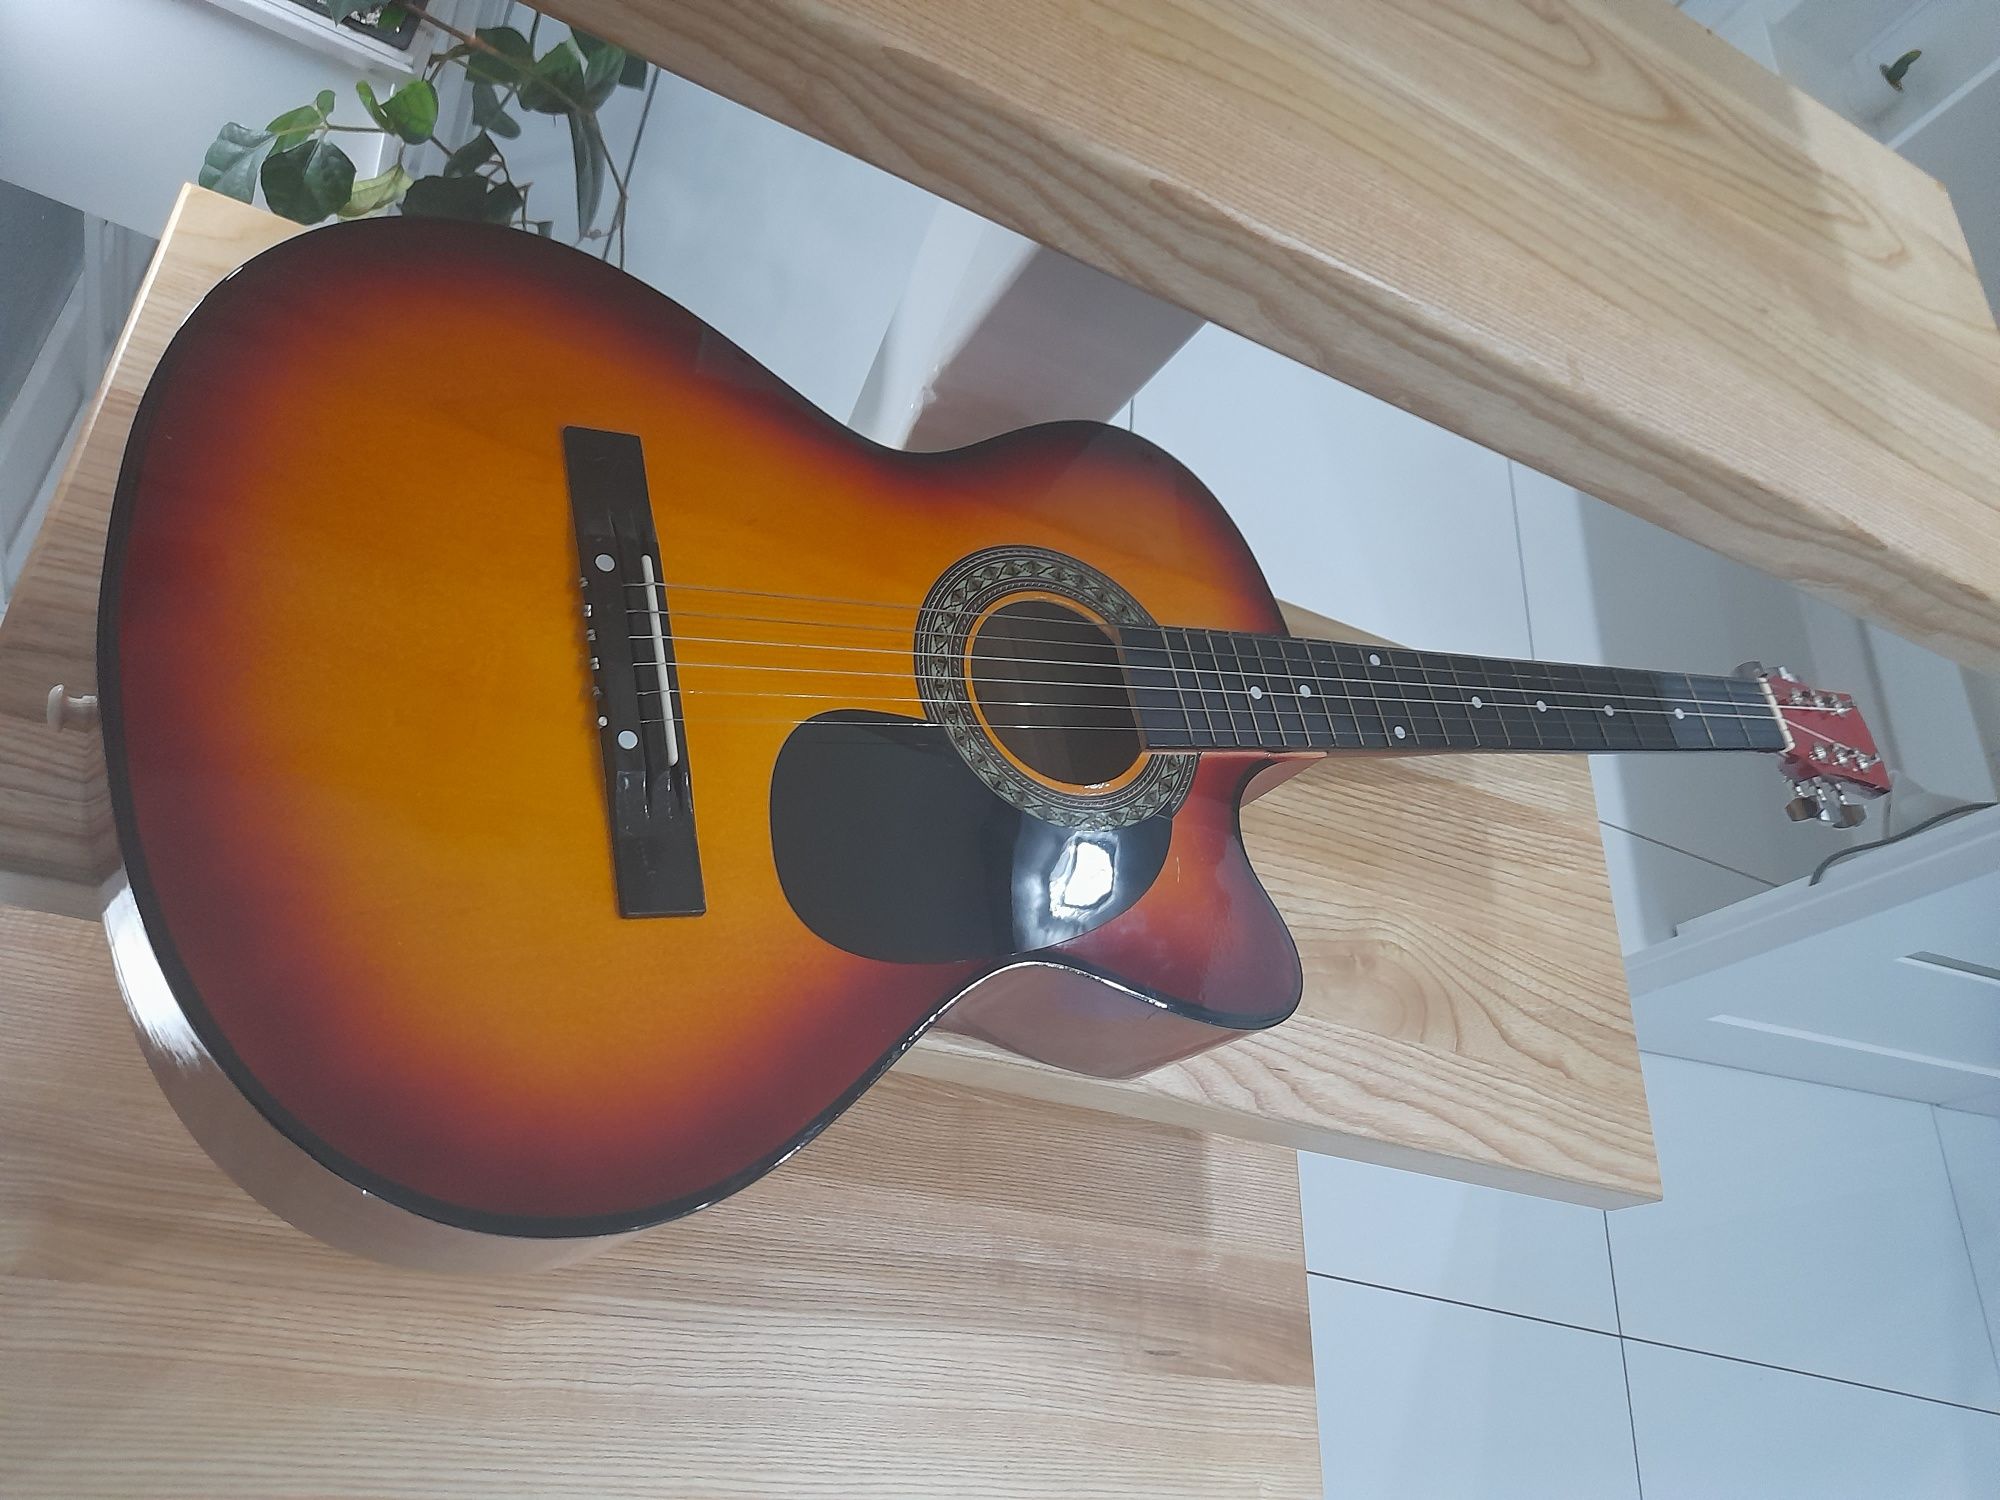 Gitara akustyczna Castelo G3 rozmiar 4/4 kolor podpalany